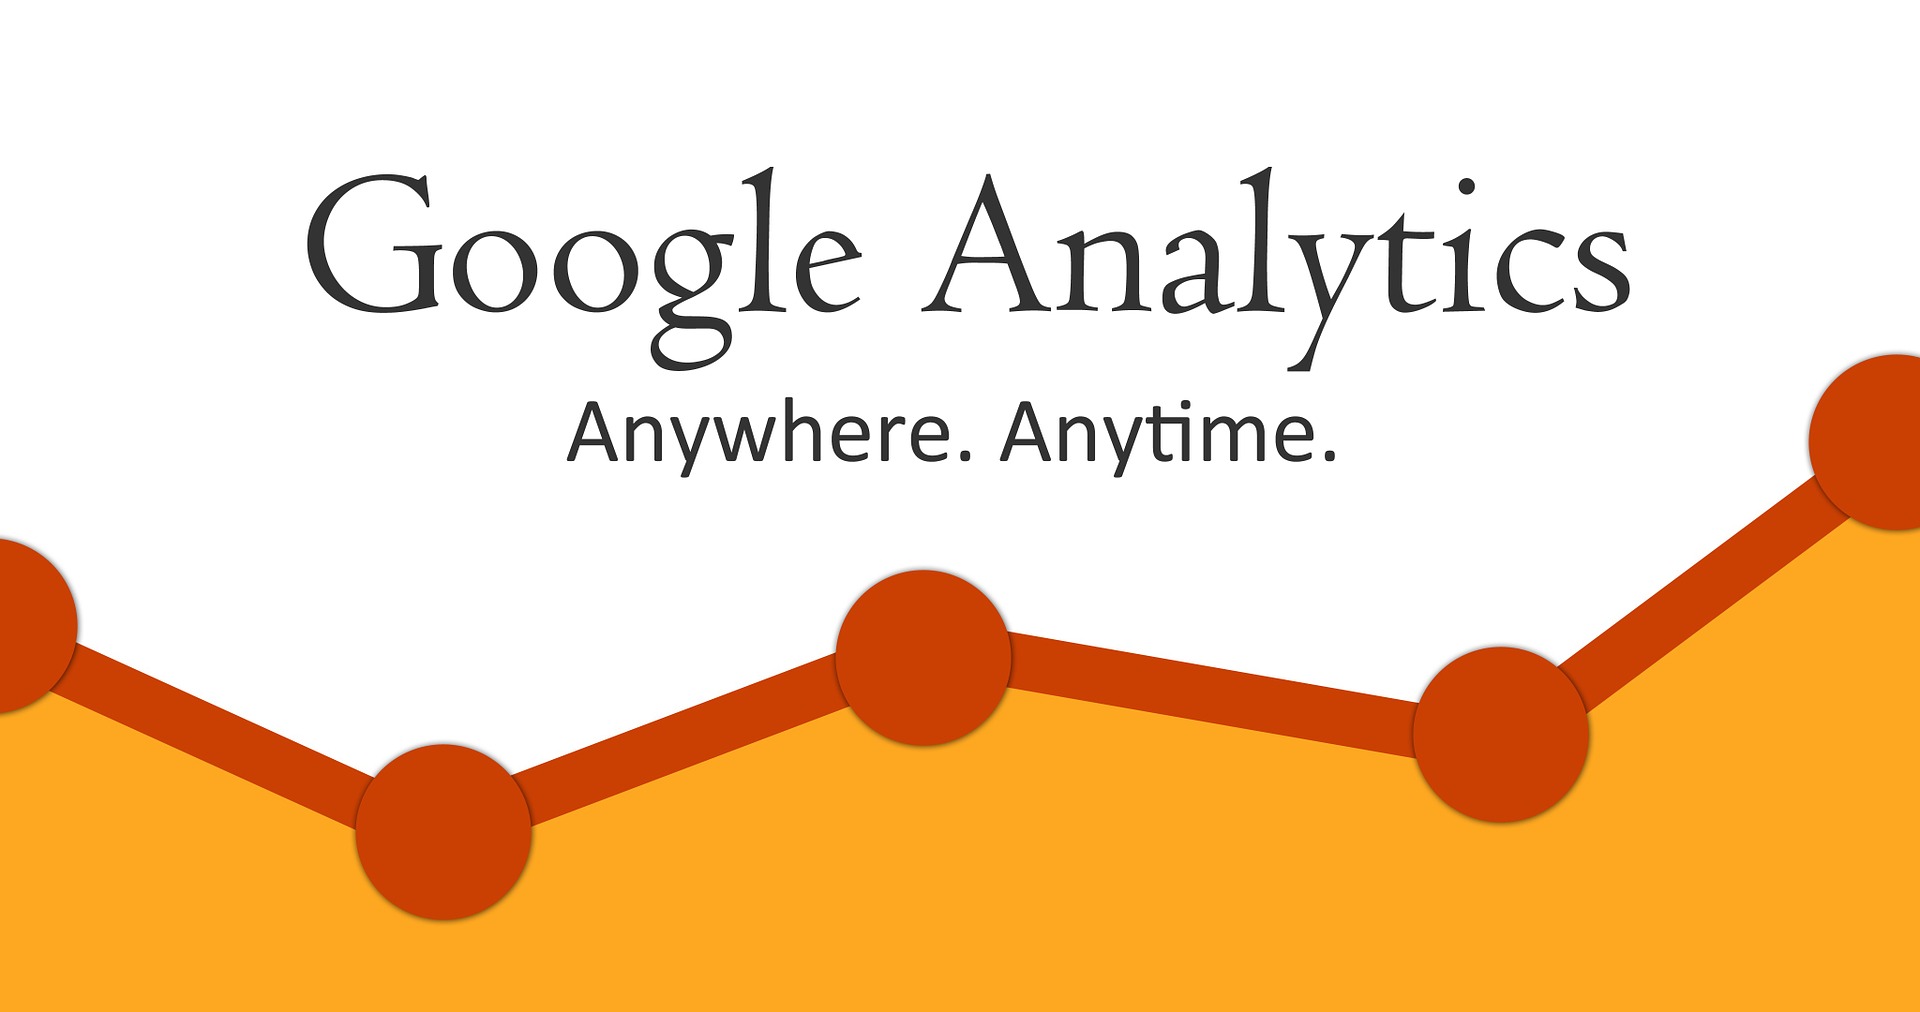 Google Analytics narzędzie do monitoringu ruchu na stronie